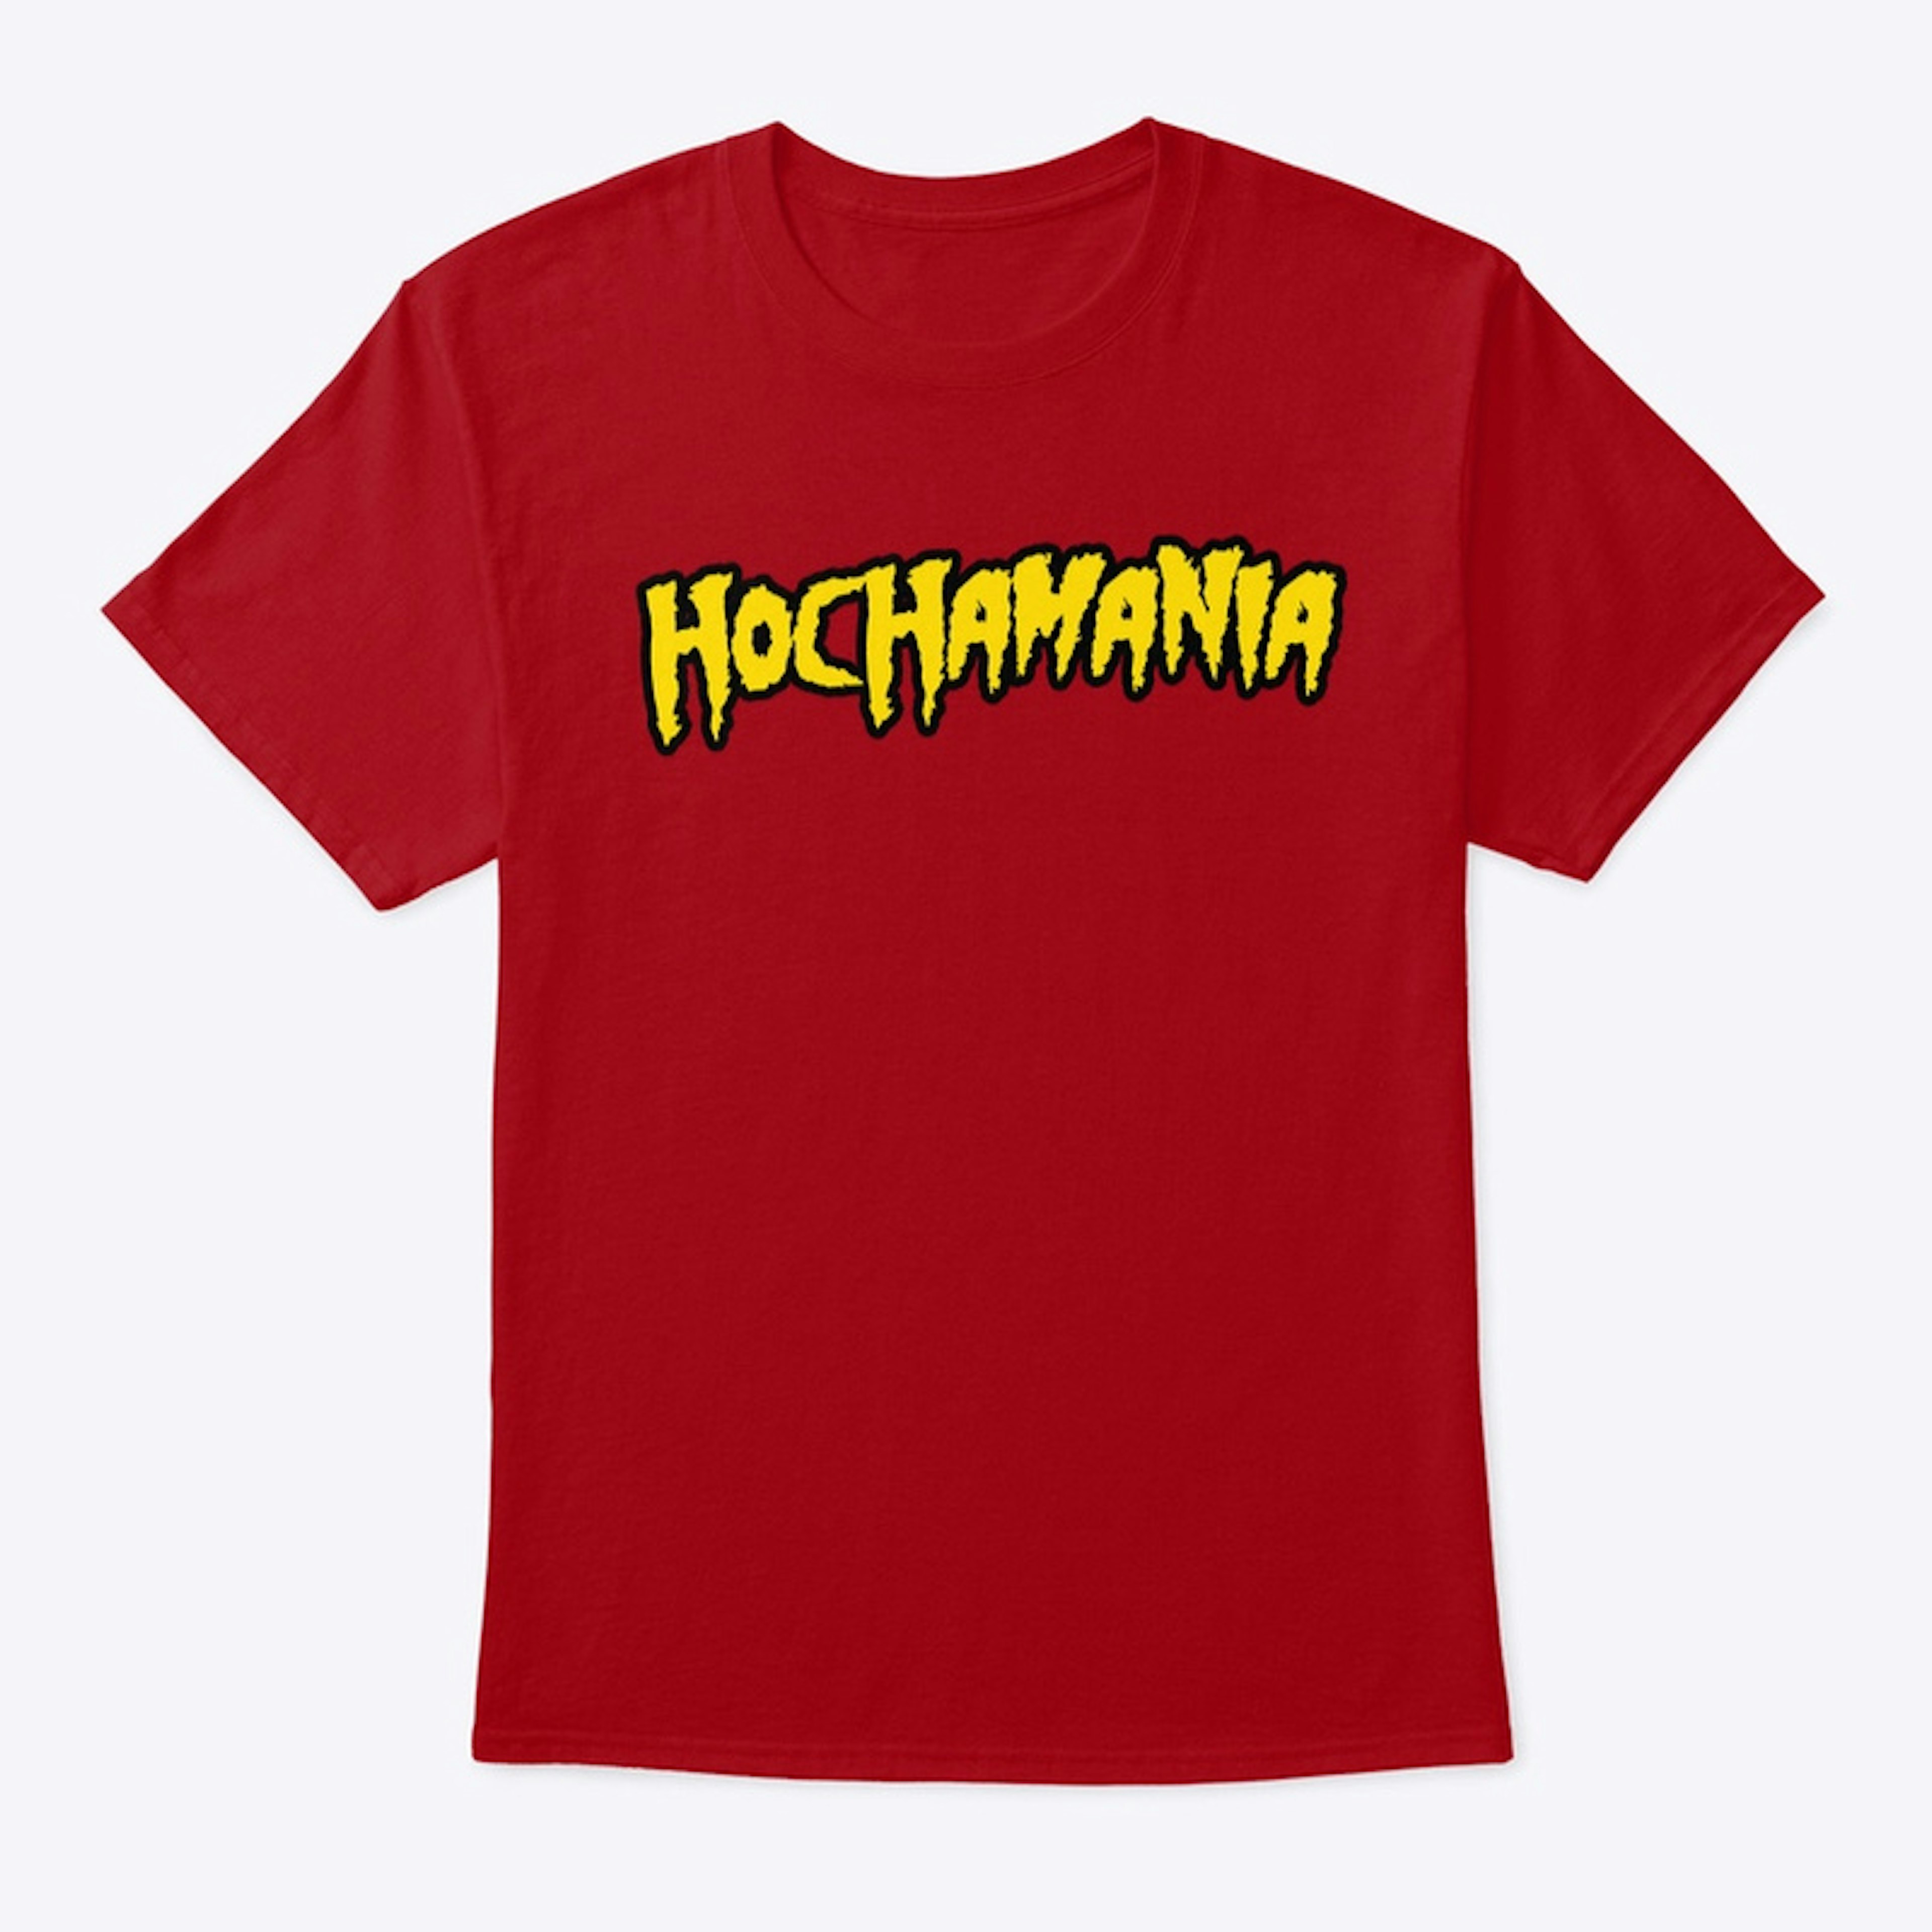 Hochamania